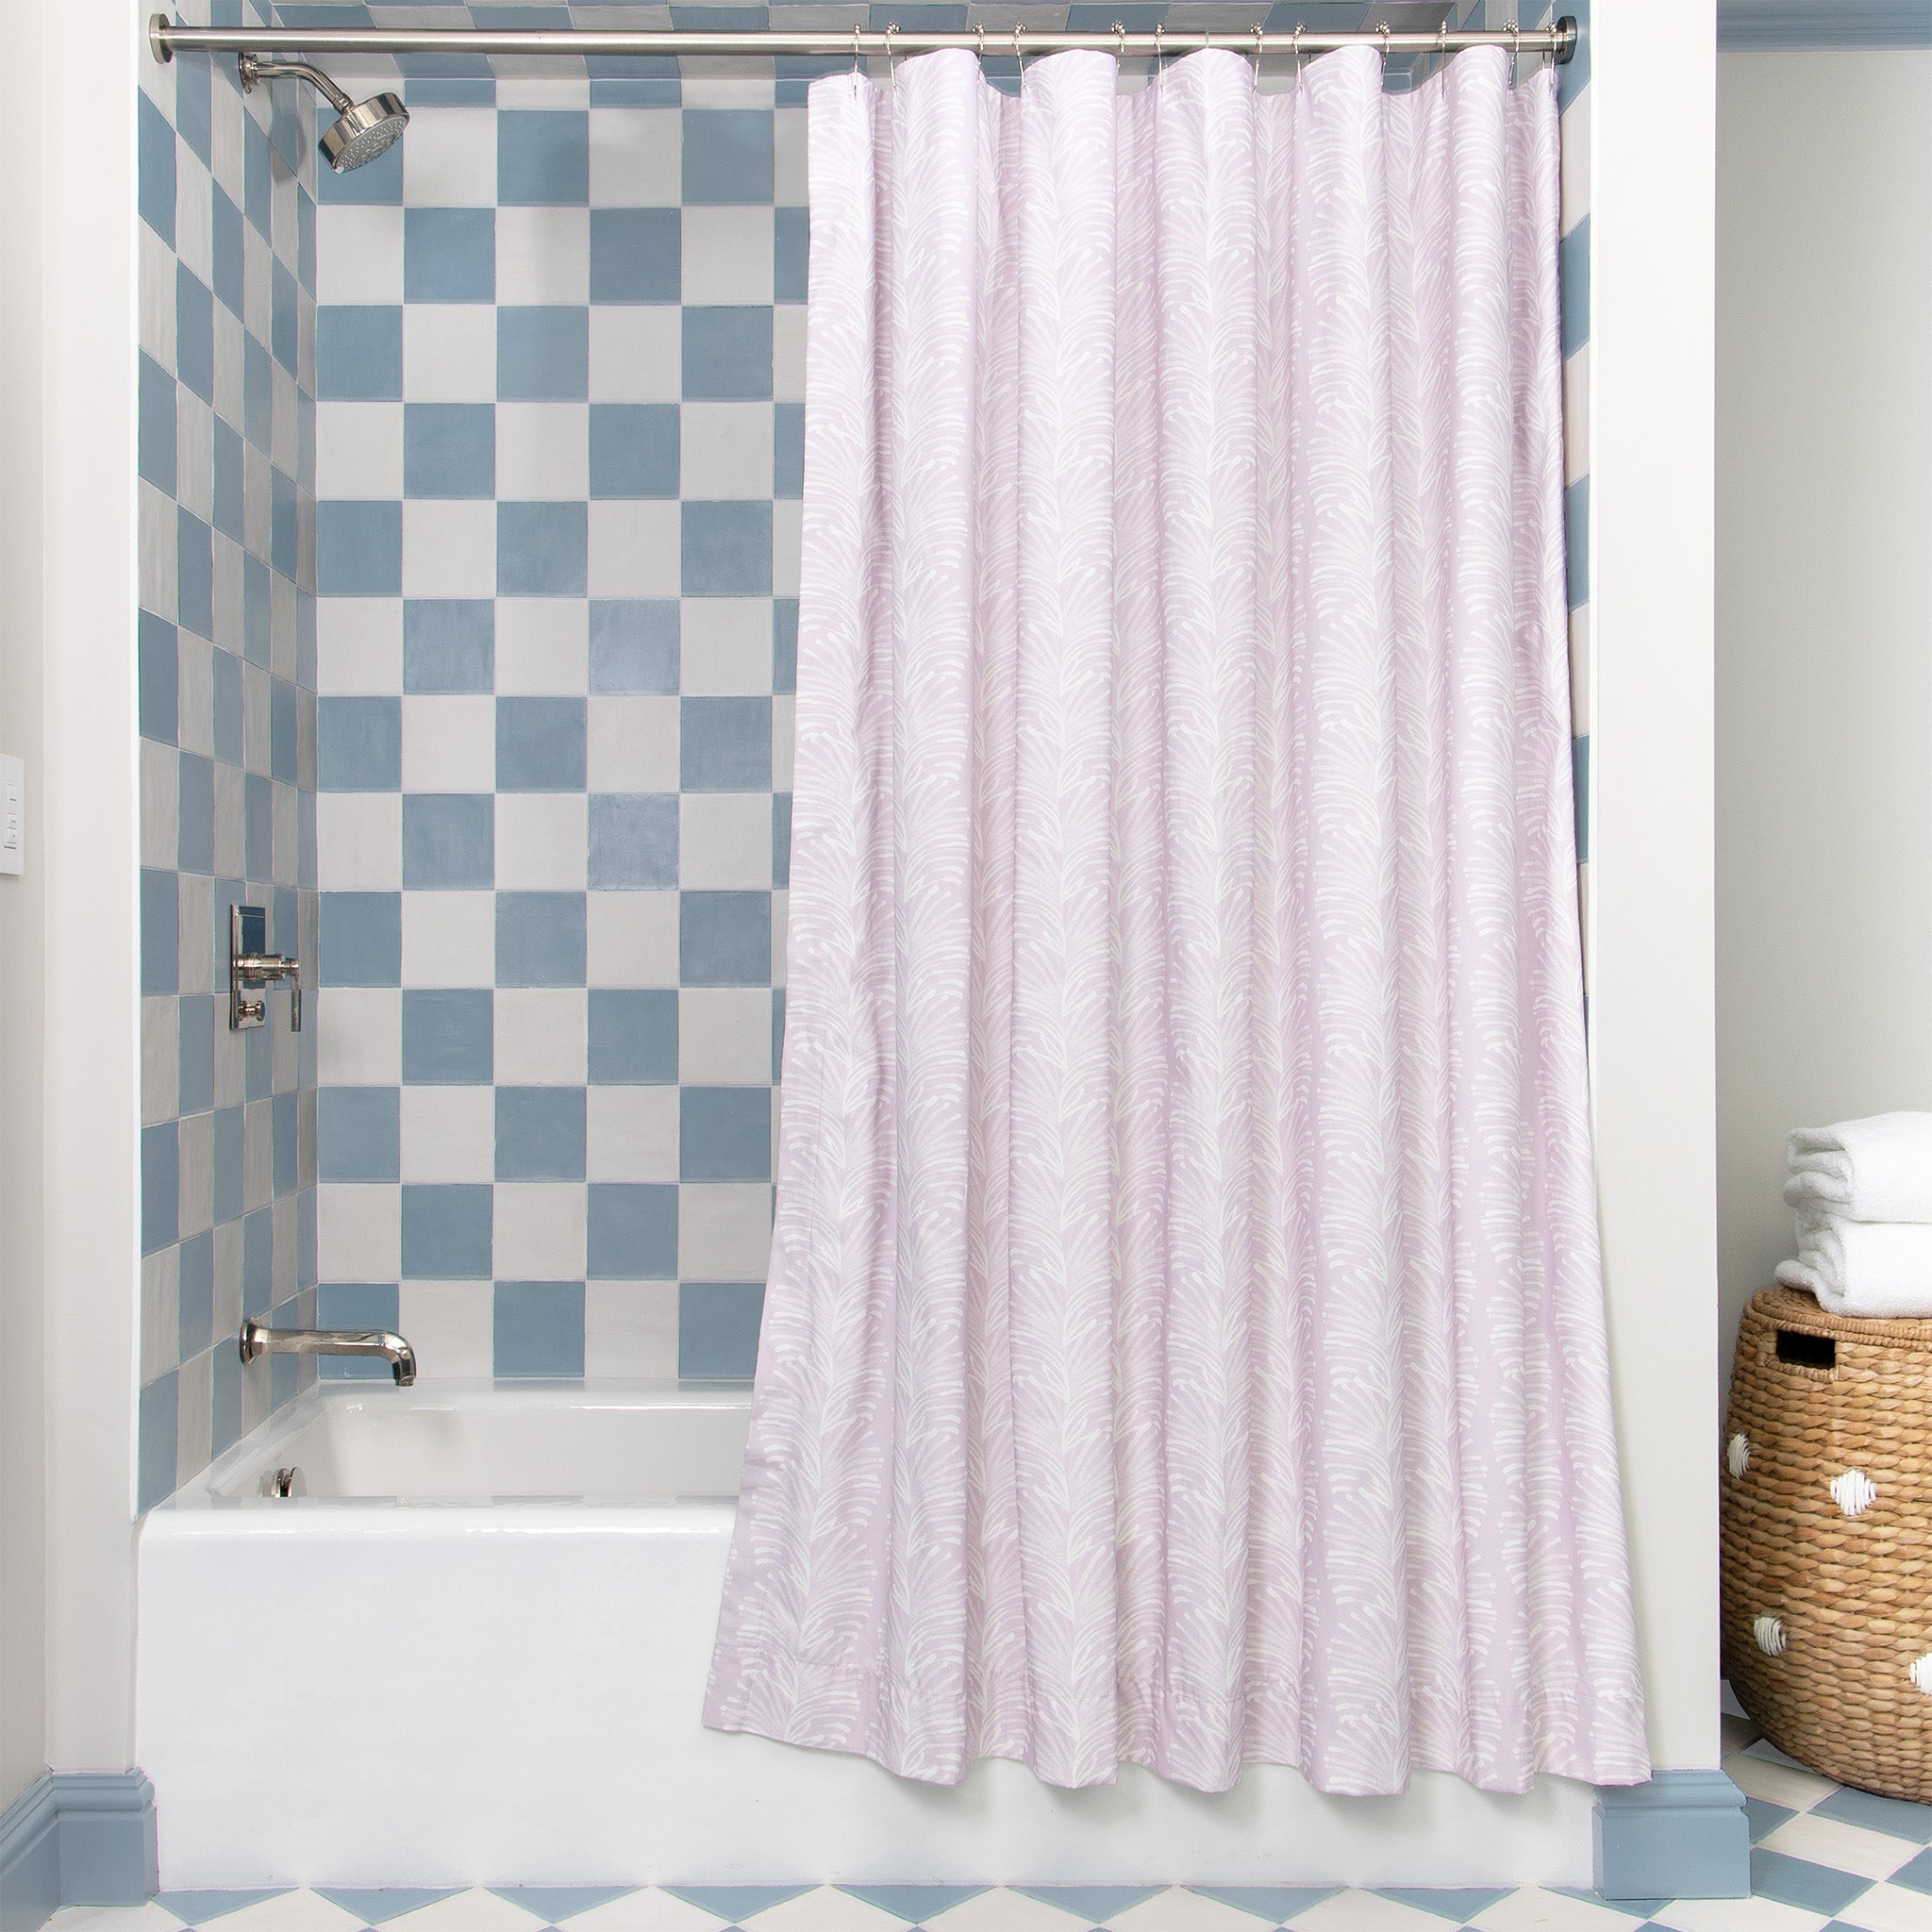 Shower Curtains 70 x 73 from DiaNoche Designs by Brazen Design